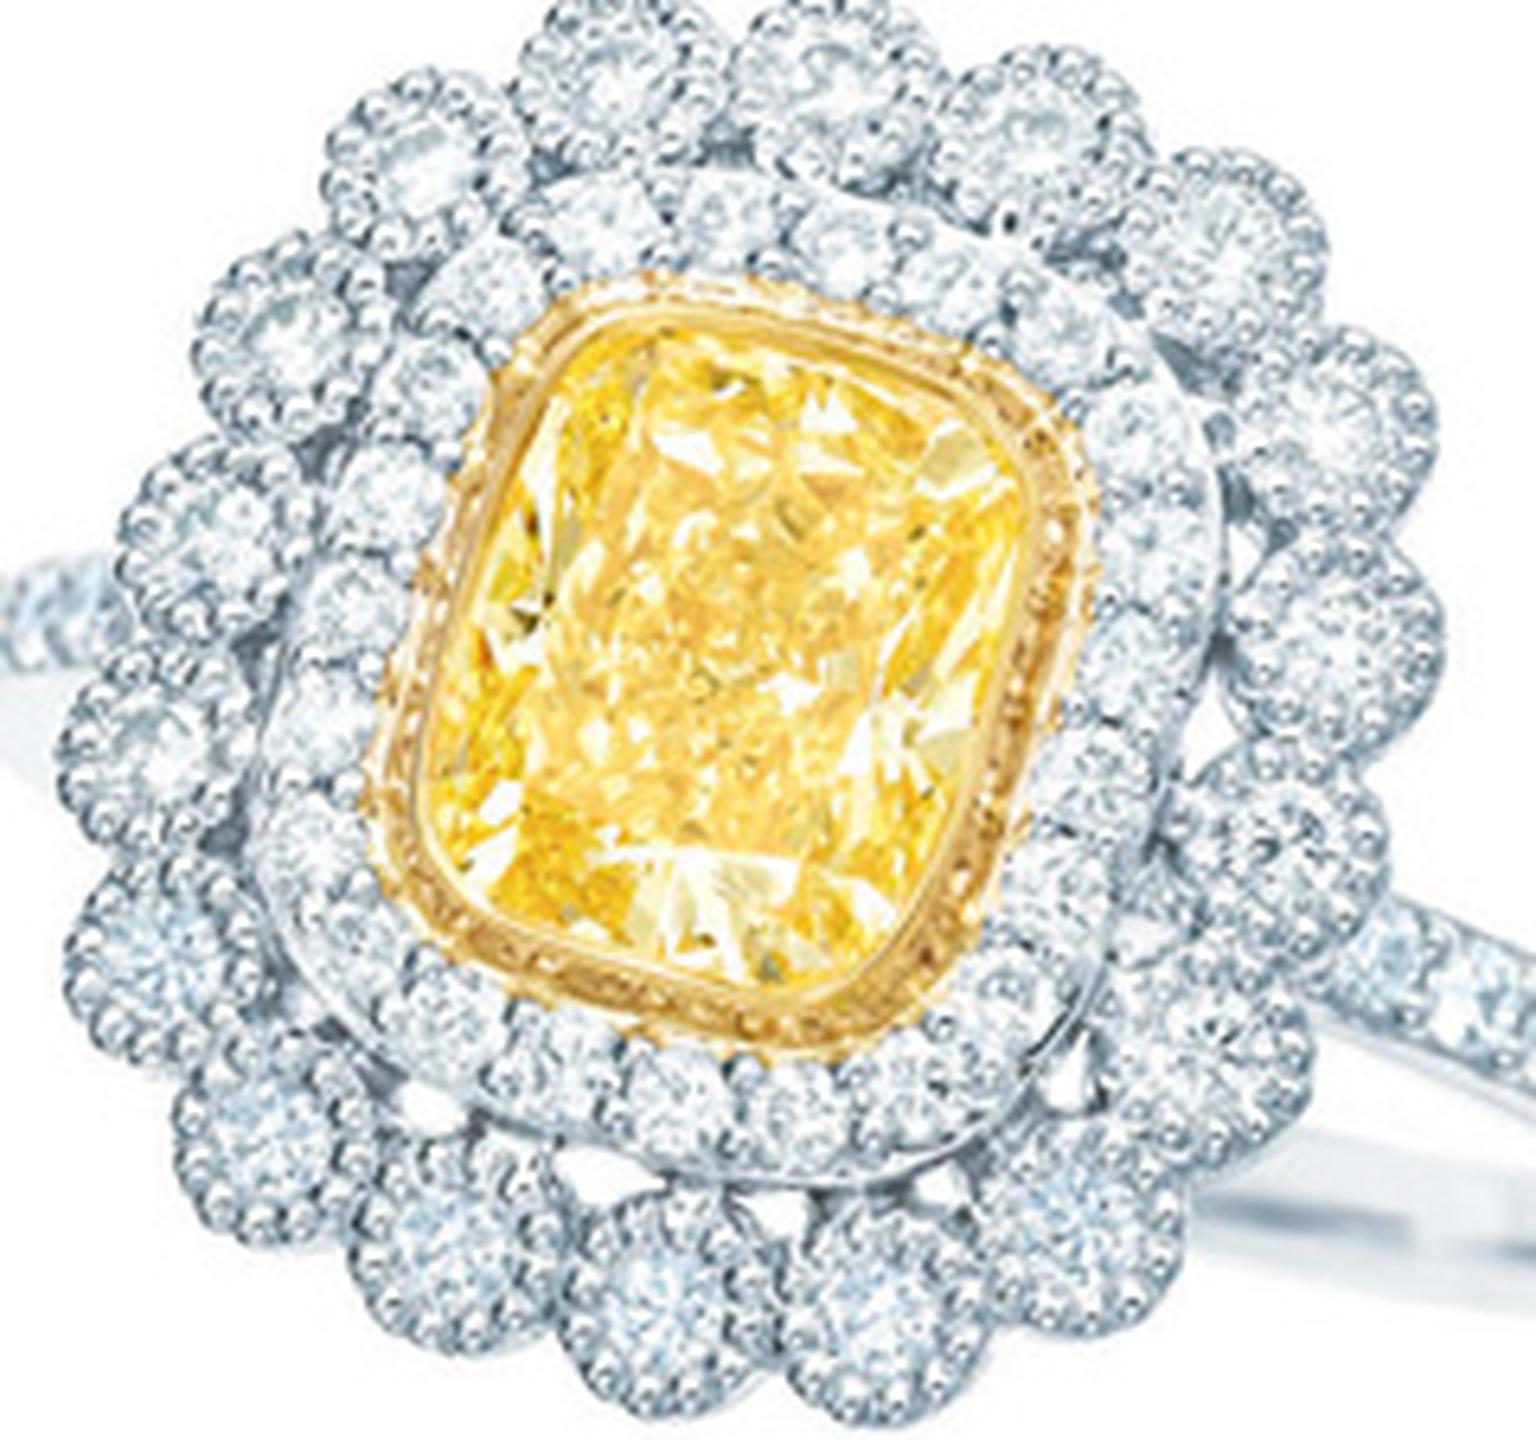 HP240x245Tiffany-Enchant-yellow-and-white-diamond-rings-set-in-platinum.jpg